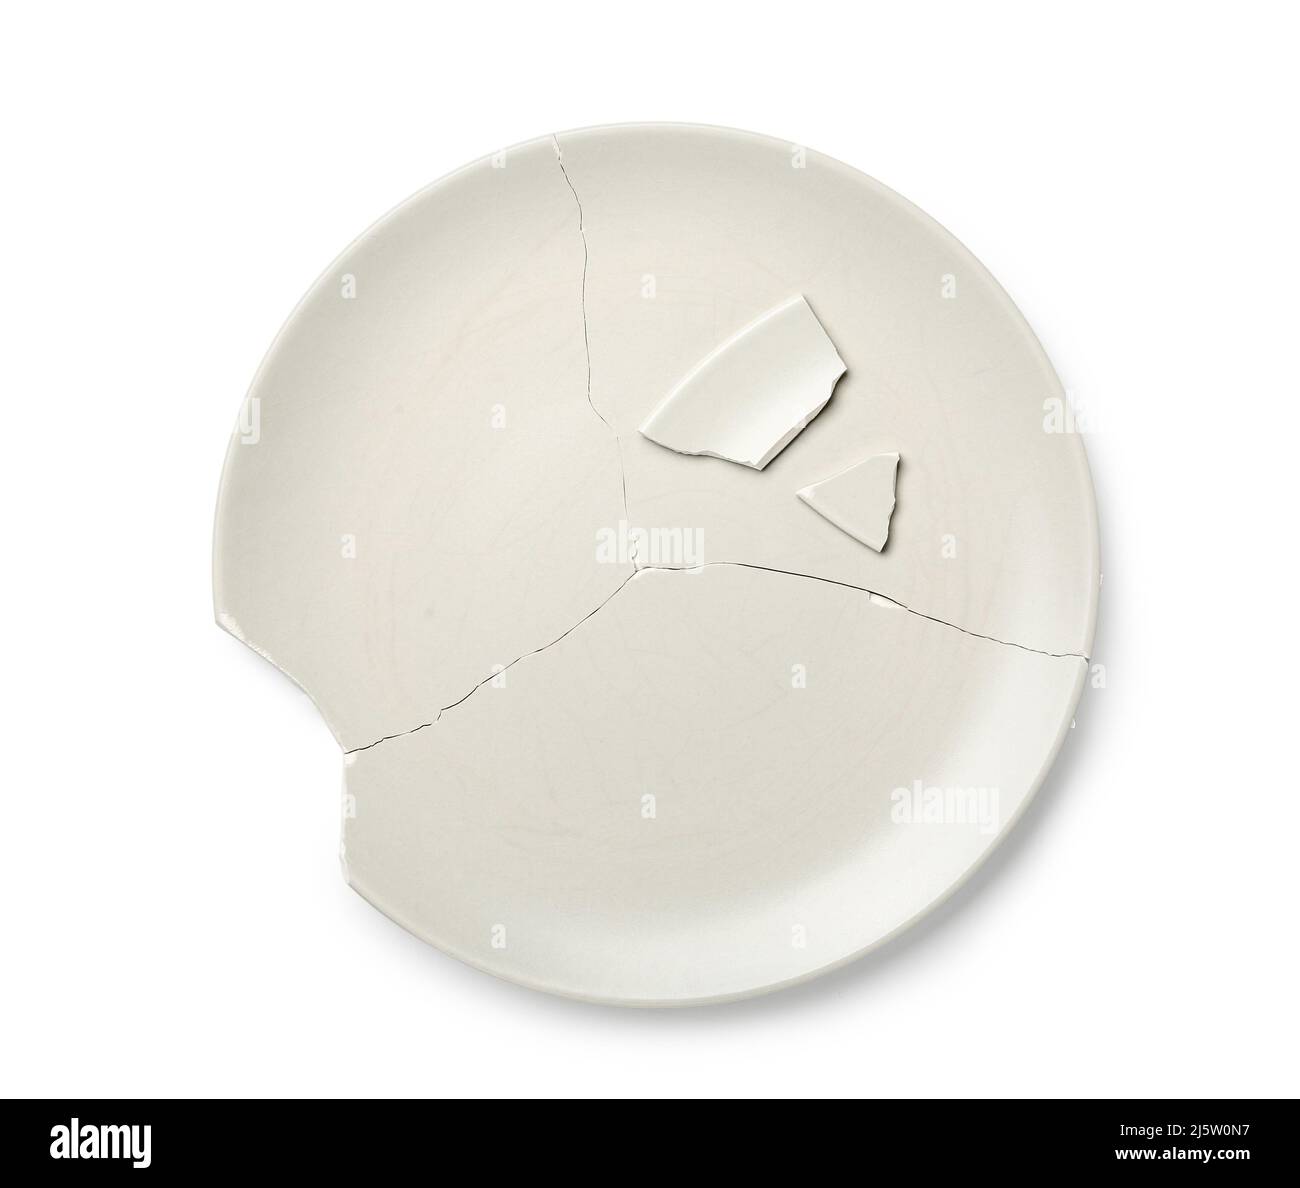 Broken ceramic plate on white background Stock Photo